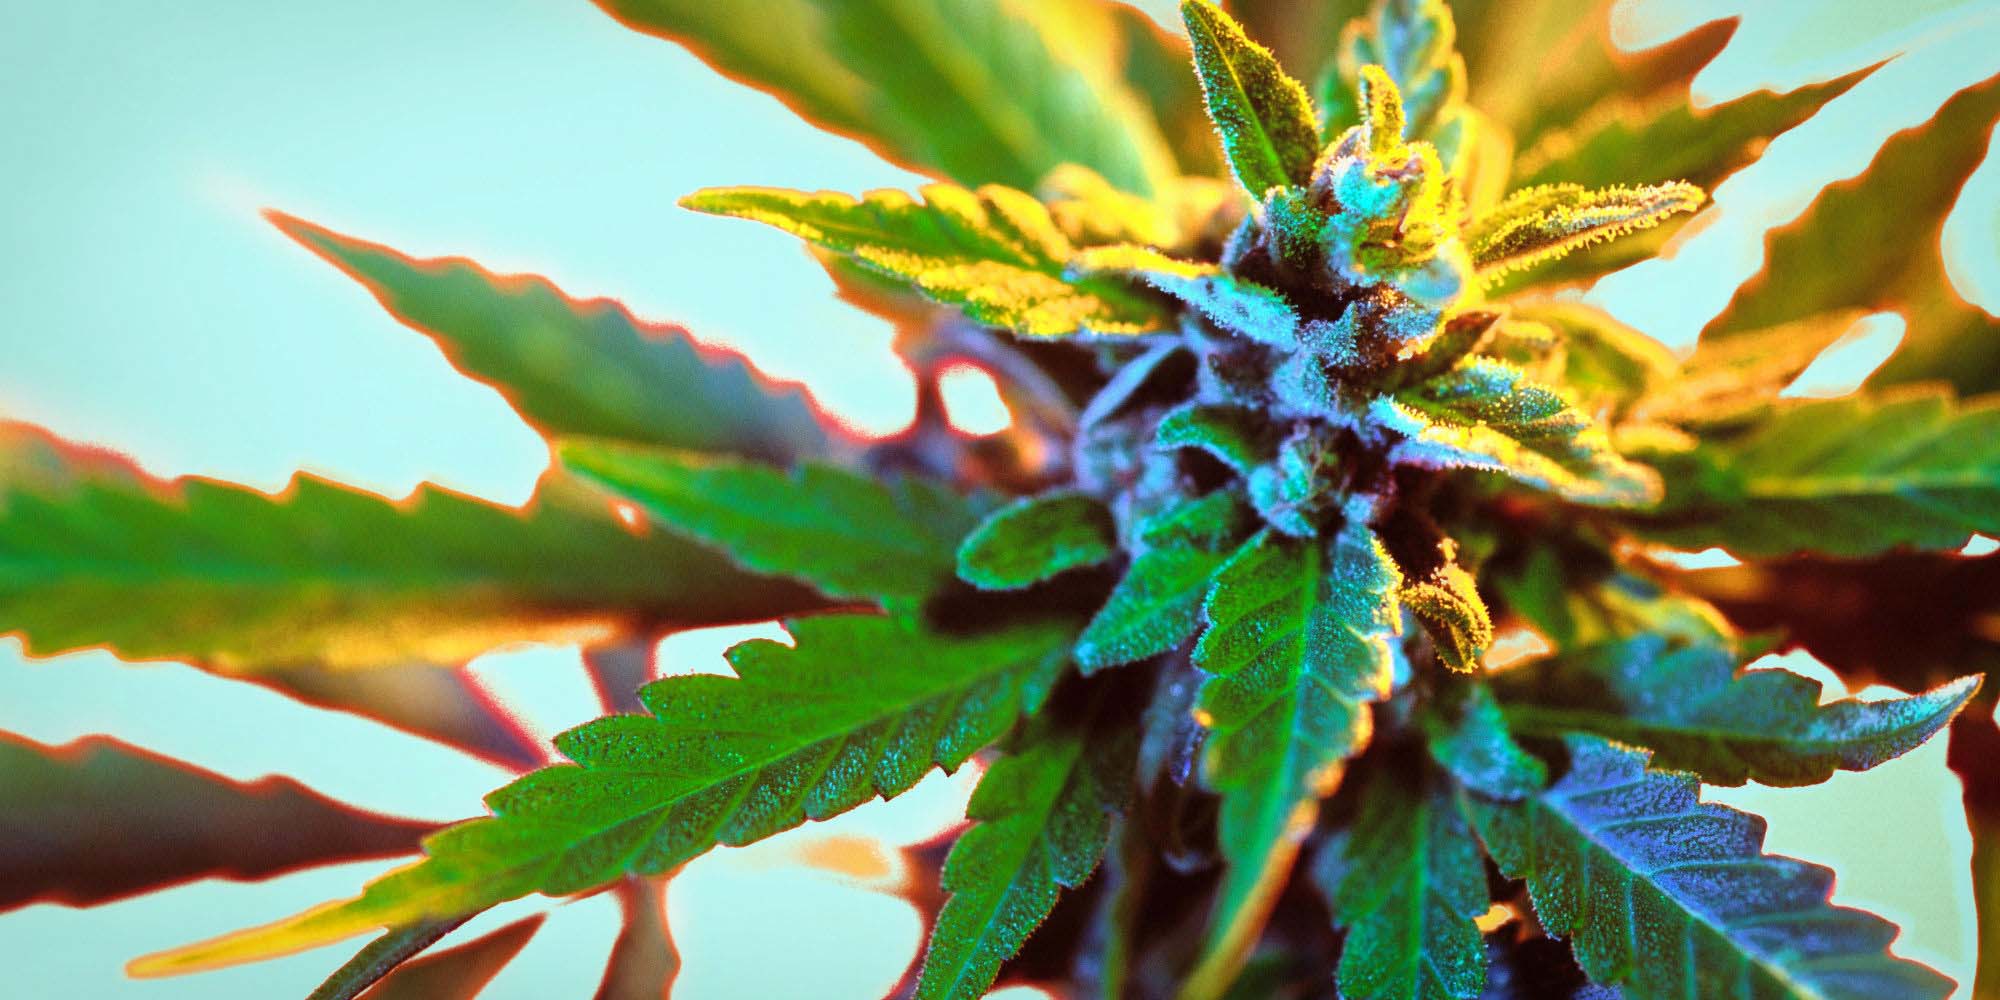 Mangoes - The Secret To Unlocking Marijuana's True Potential?